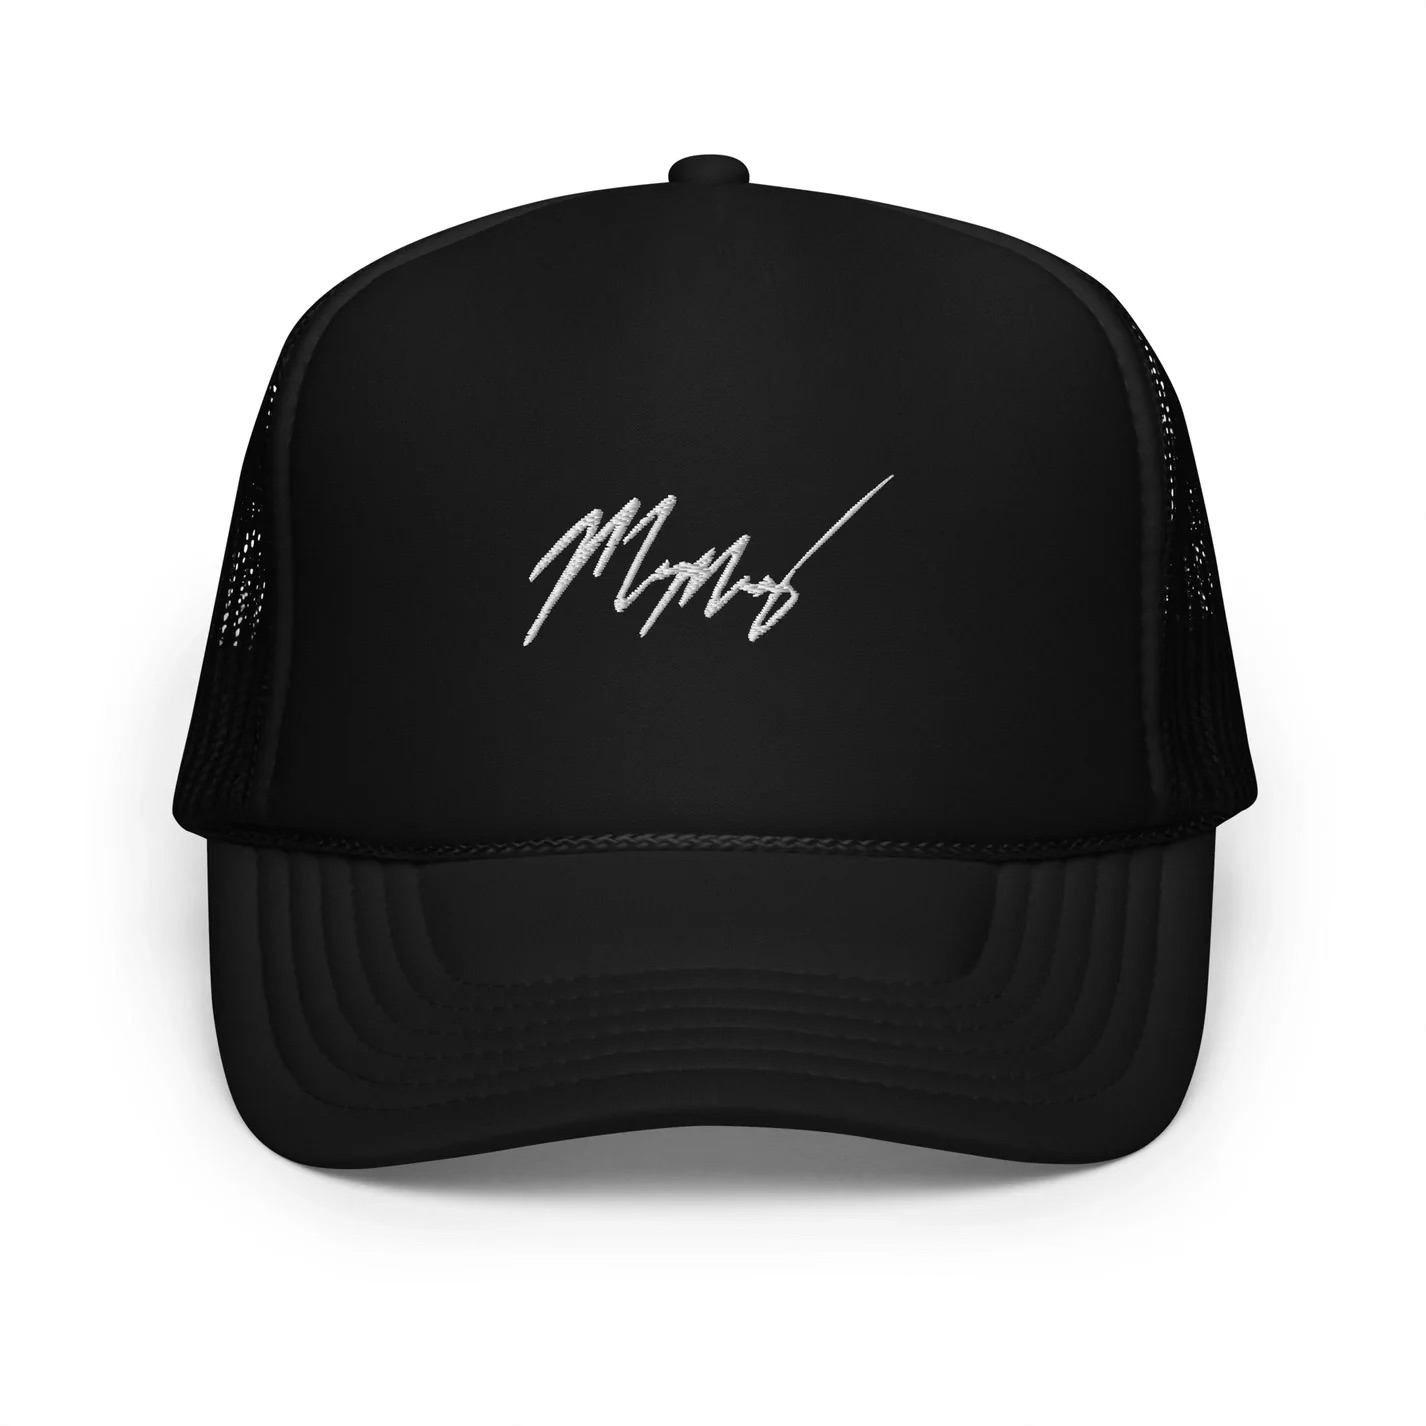 Mason Murphy Black Trucker Hat